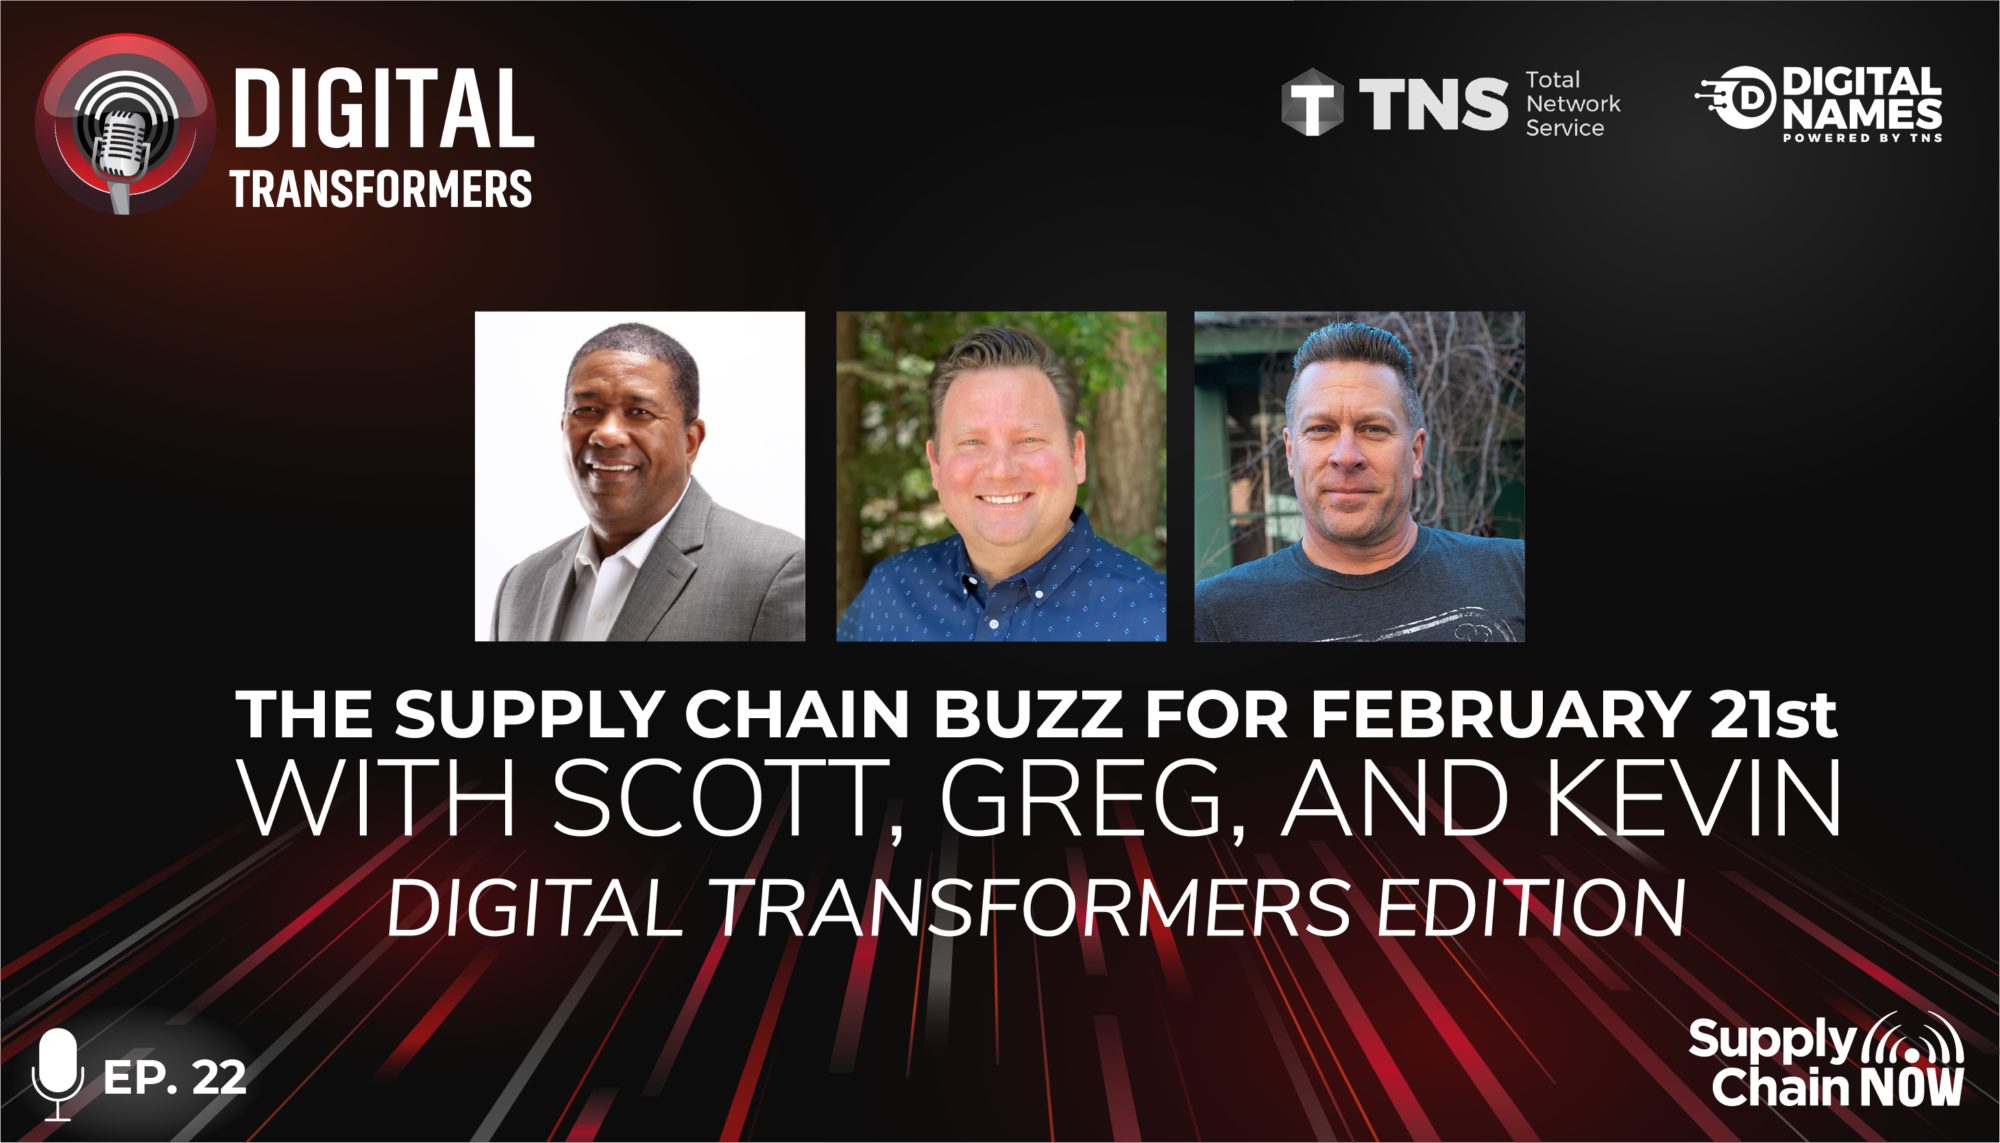 Supply Chain Buzz: Digital Transformers Edition